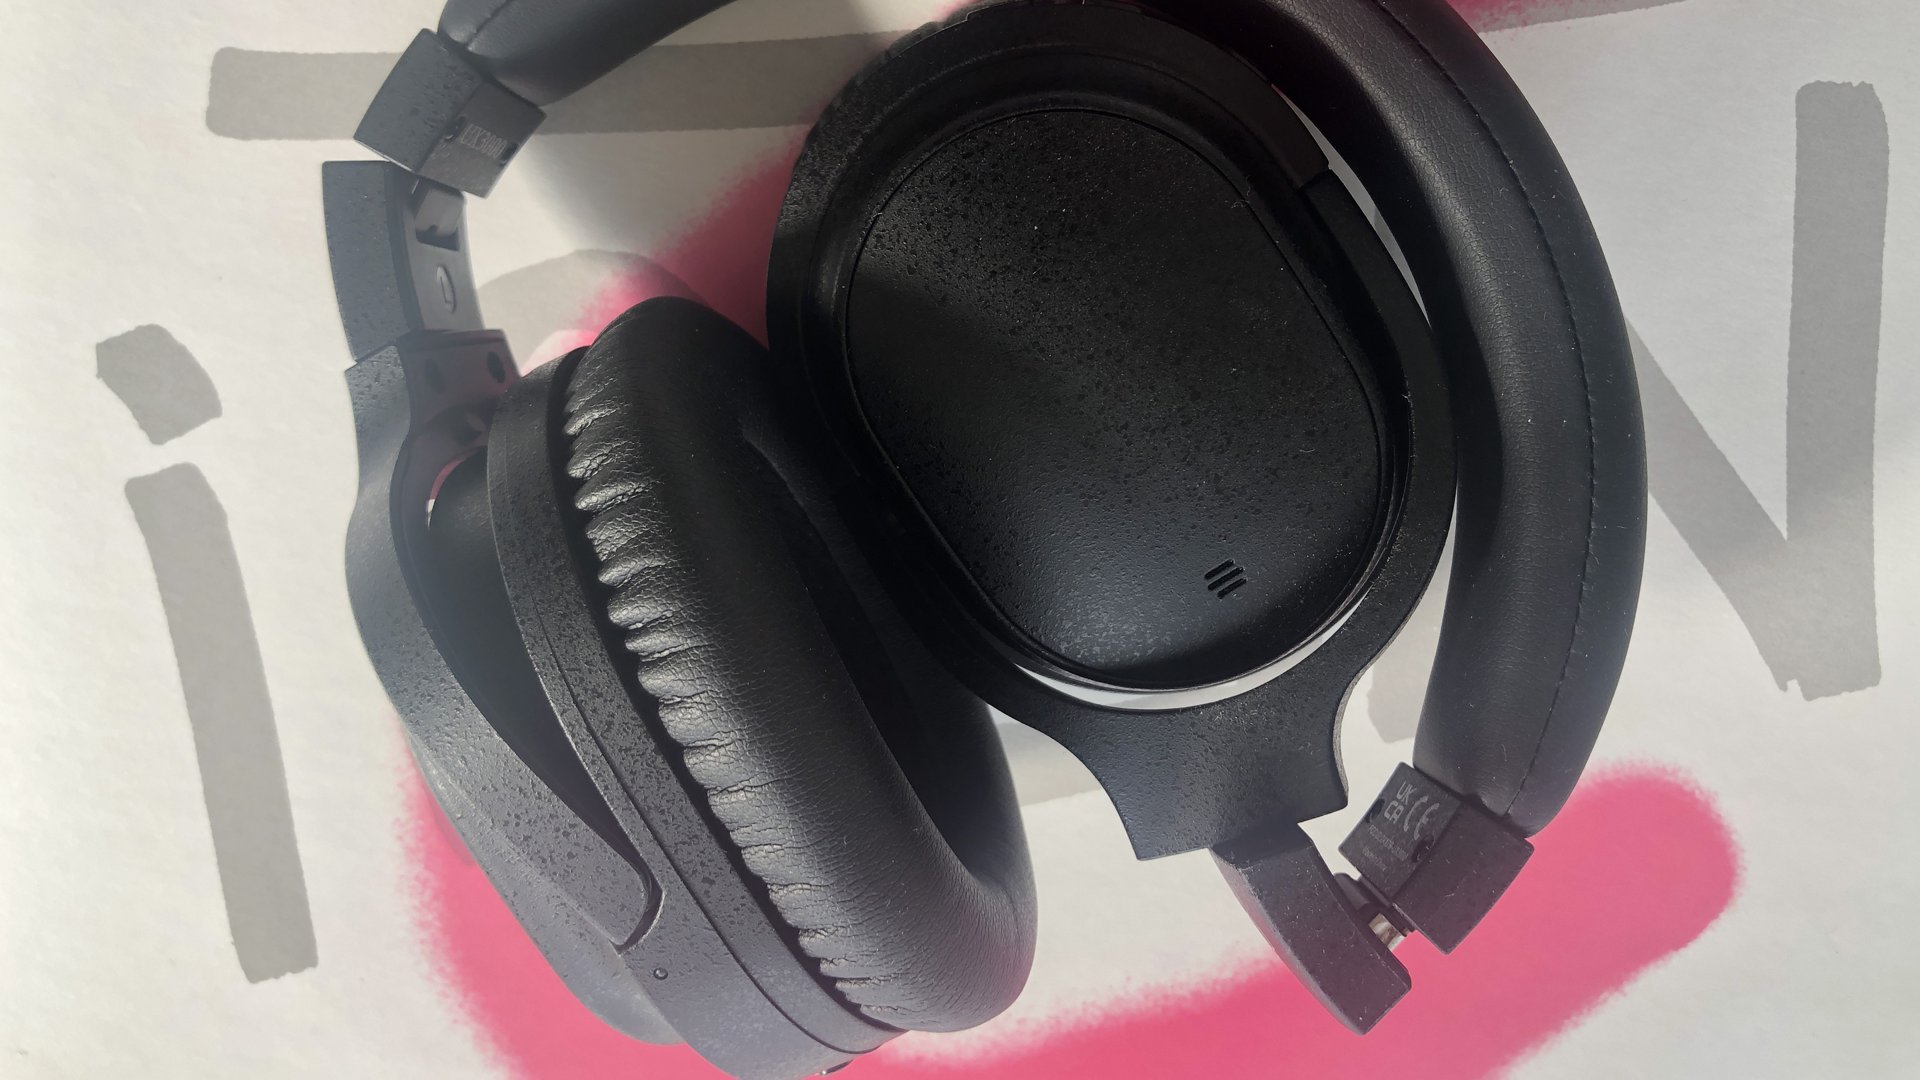 Le ultime cuffie audio in-ear ripiegate UX3000